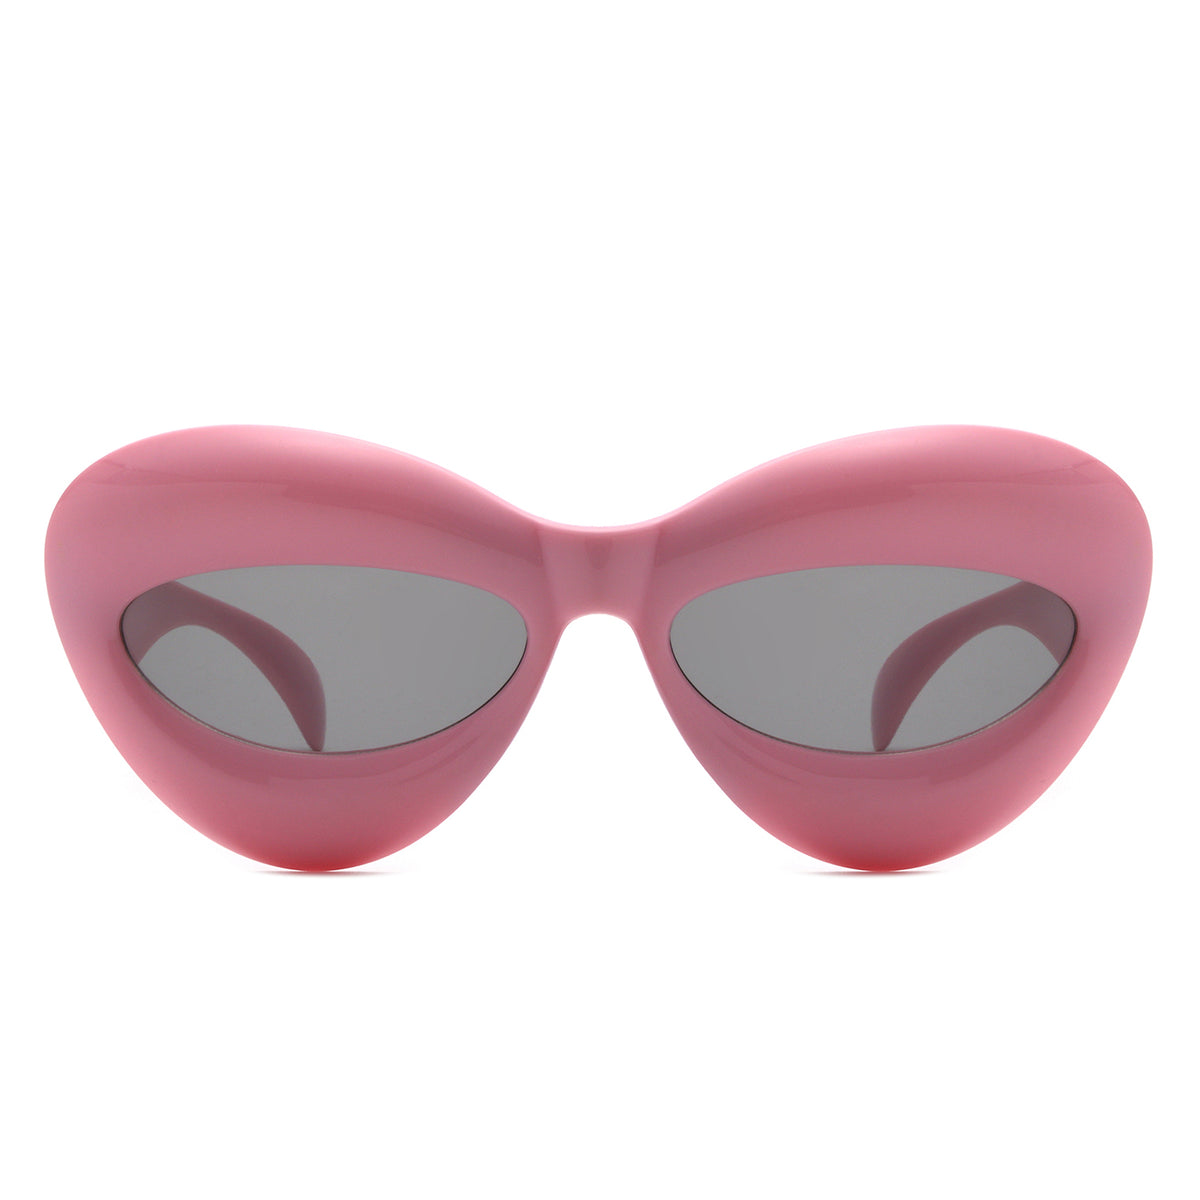 HK1031 - Girls Lips Shape Fun Tinted Kids Wholesale Sunglasses